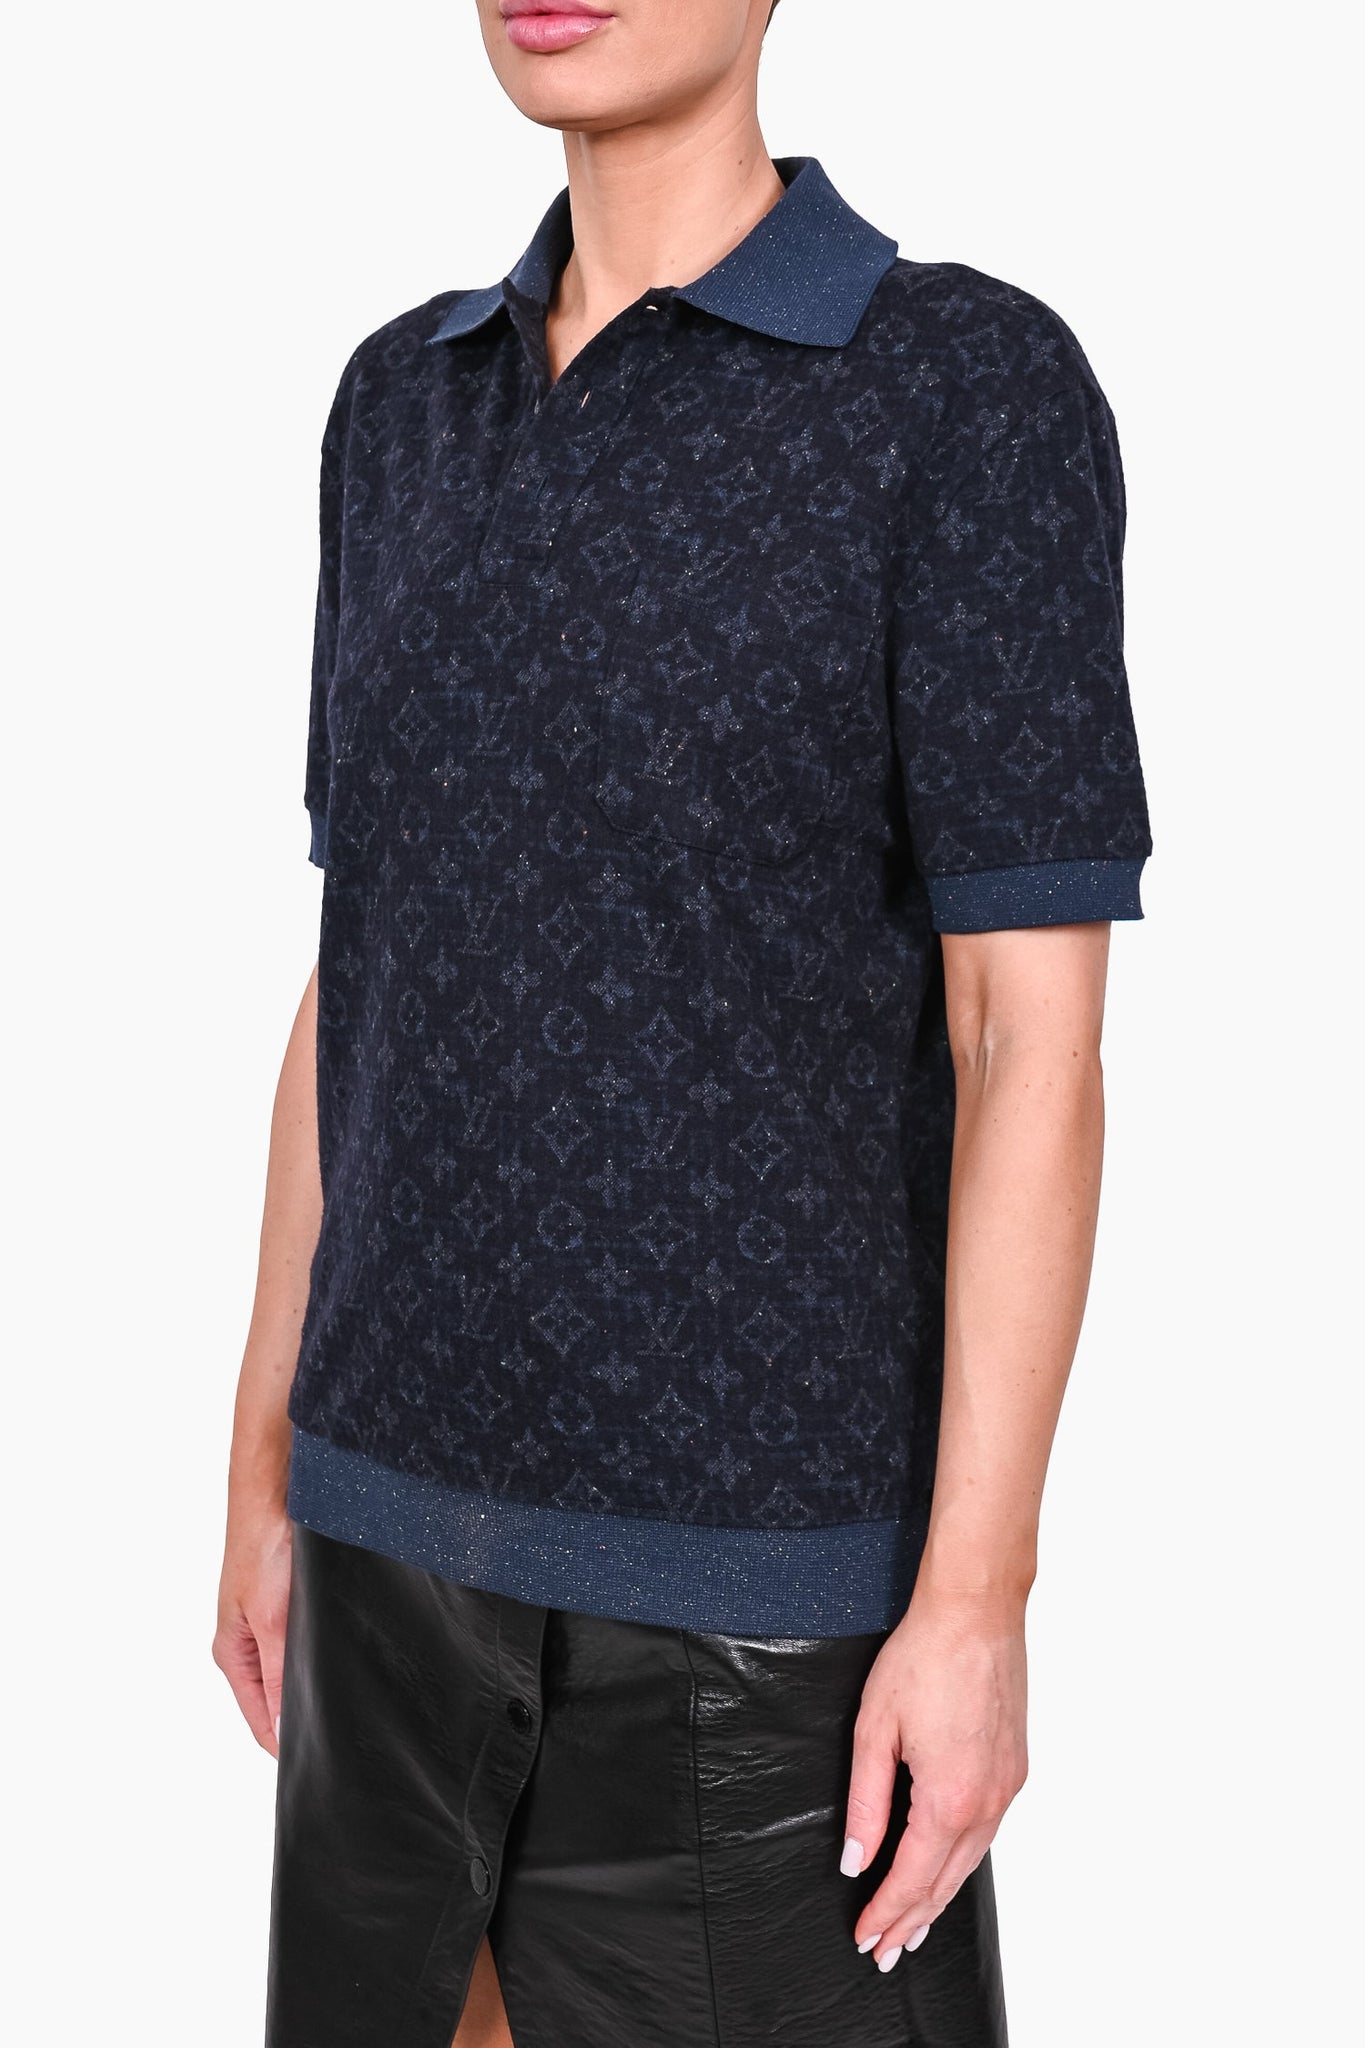 Louis Vuitton blue Silk Monogram Shirt